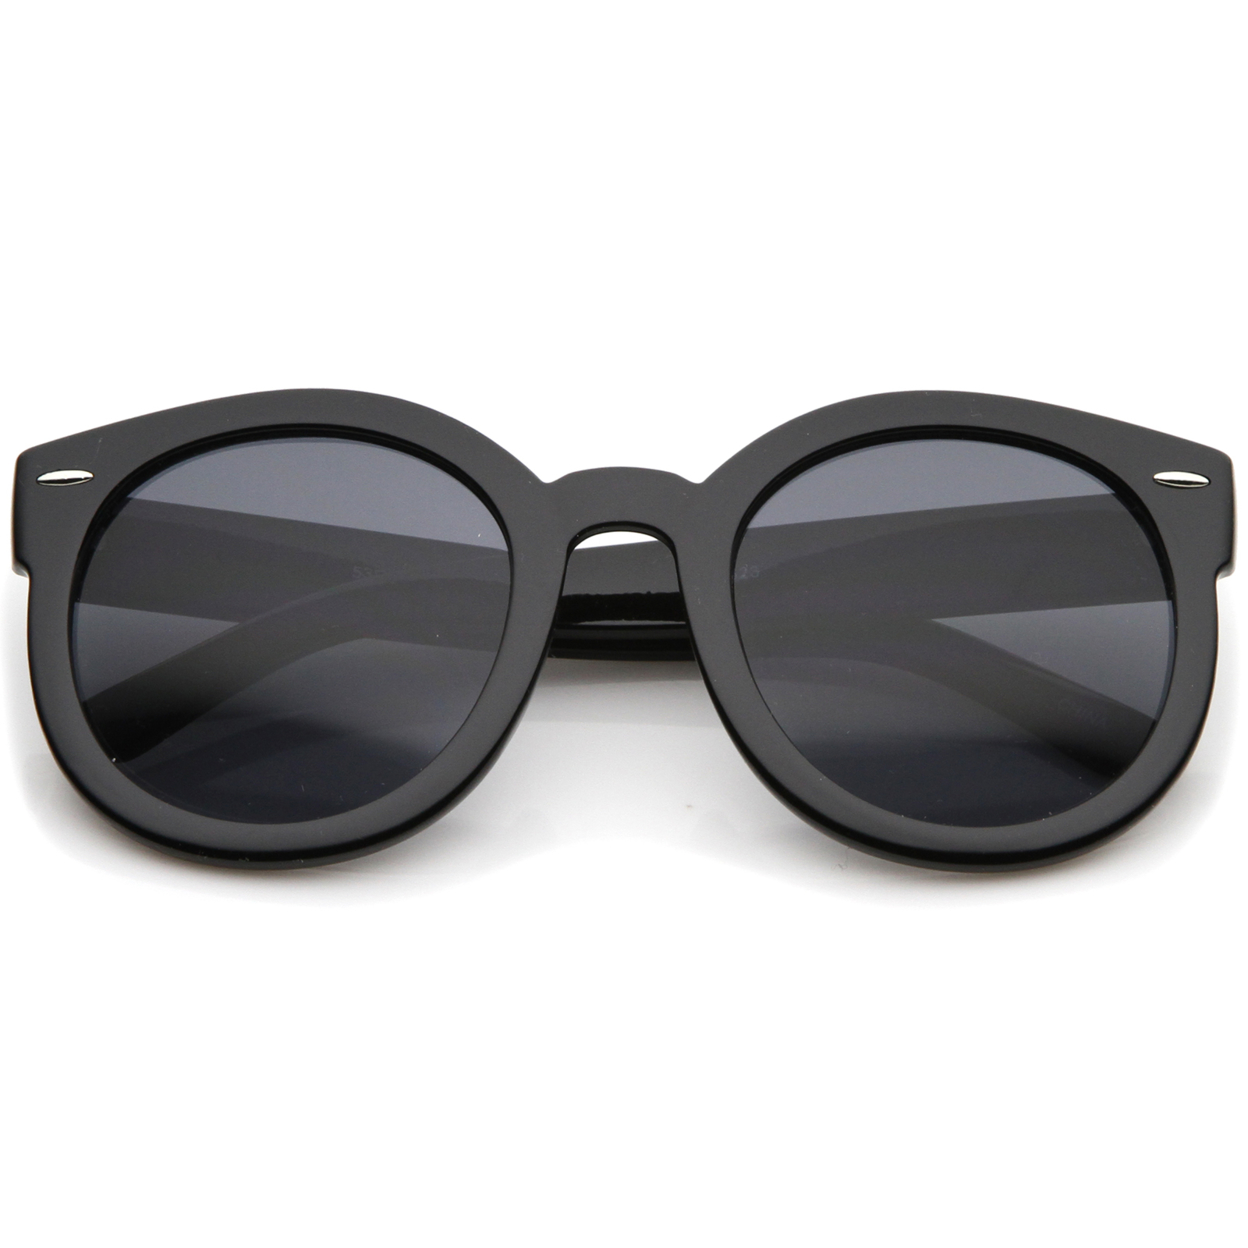 Women's Retro Oversize Horn Rimmed P3 Round Sunglasses 52mm - Black / Smoke